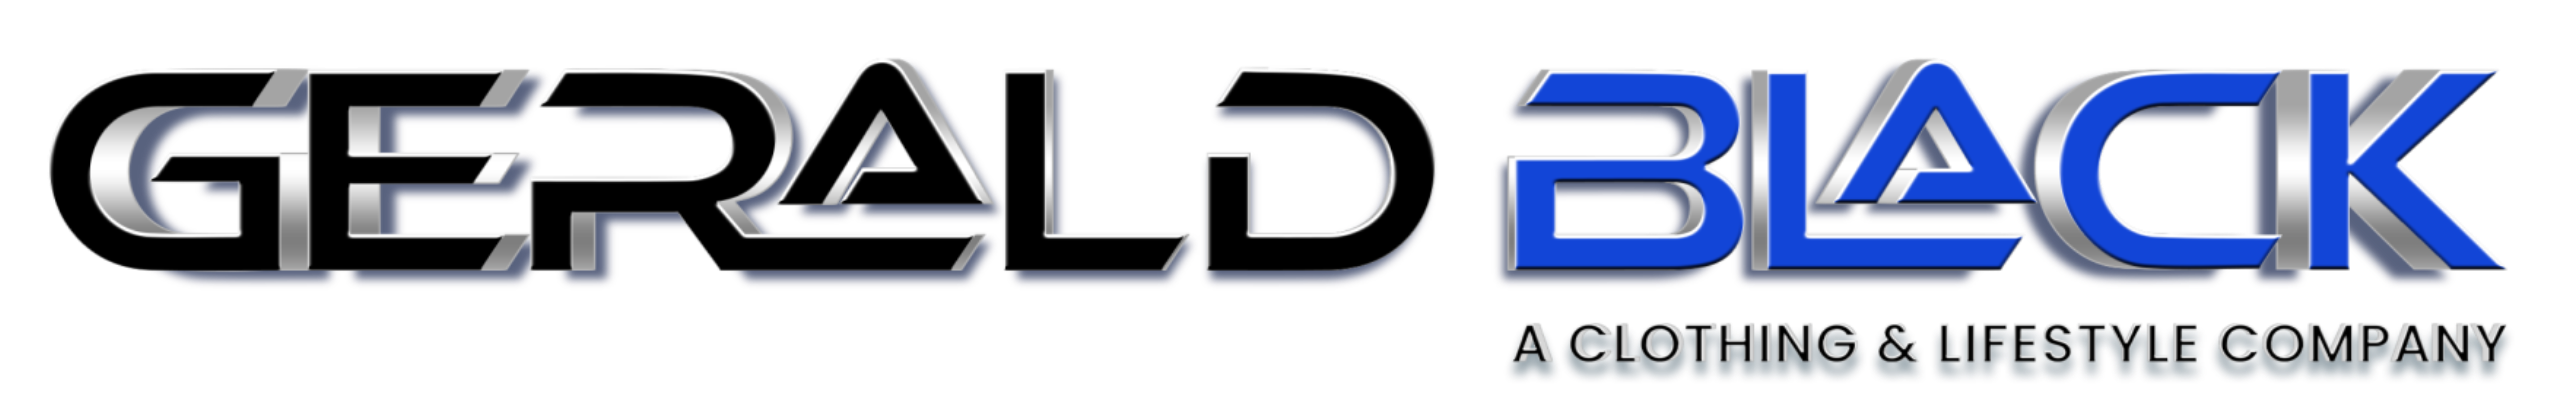 Gerald Black LLC Logo